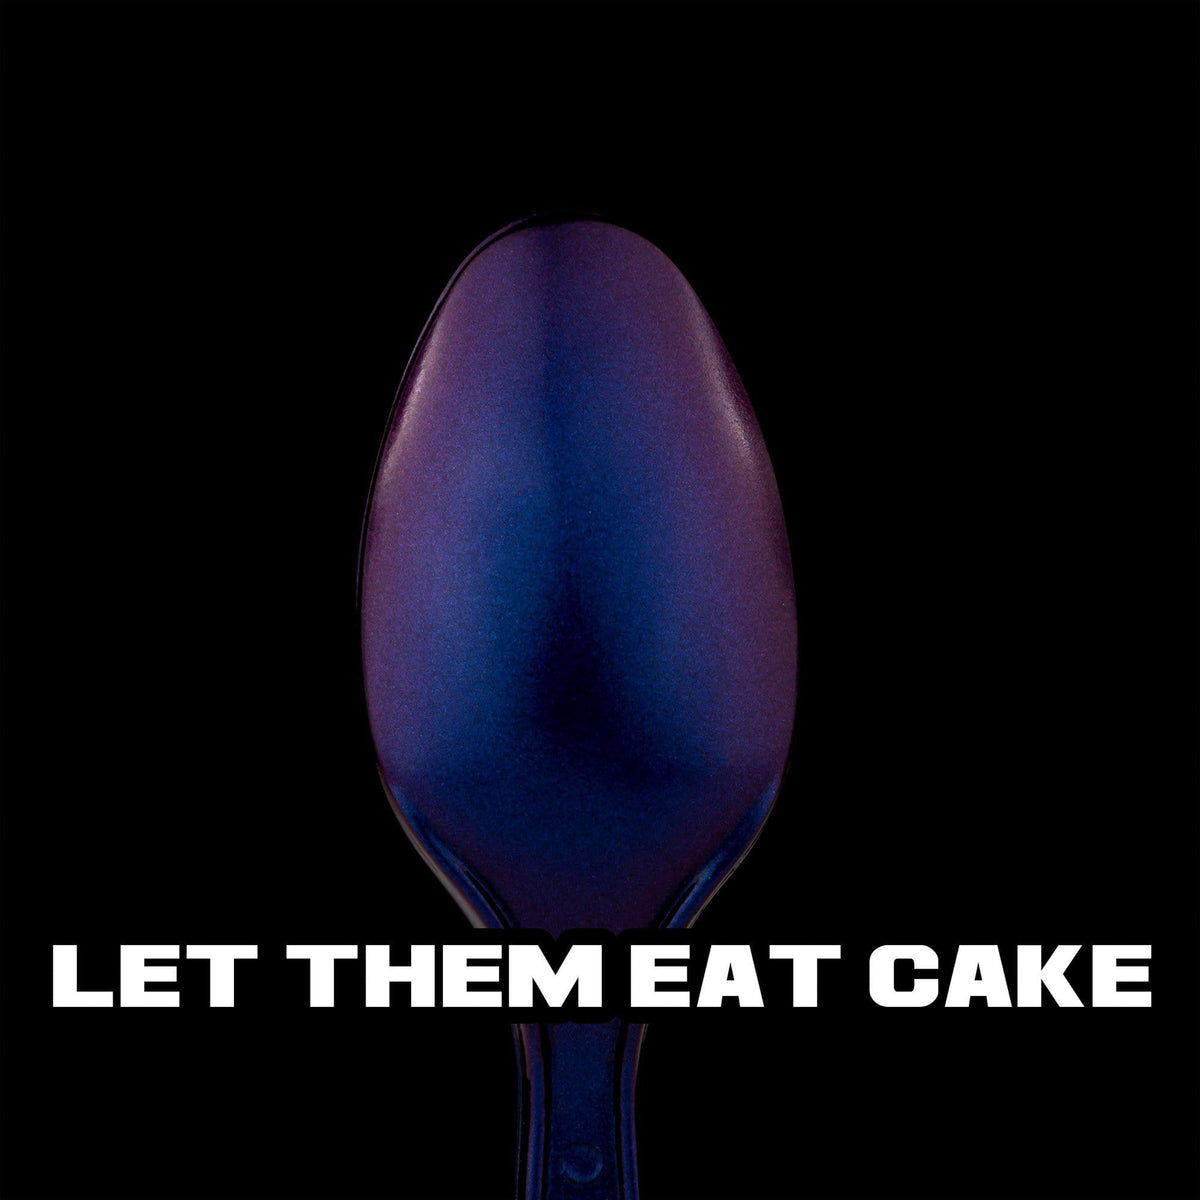 Let Them Eat Cake Colorshift Acrylic Paint Turboshift Turbo Dork Exit 23 Games Let Them Eat Cake Colorshift Acrylic Paint